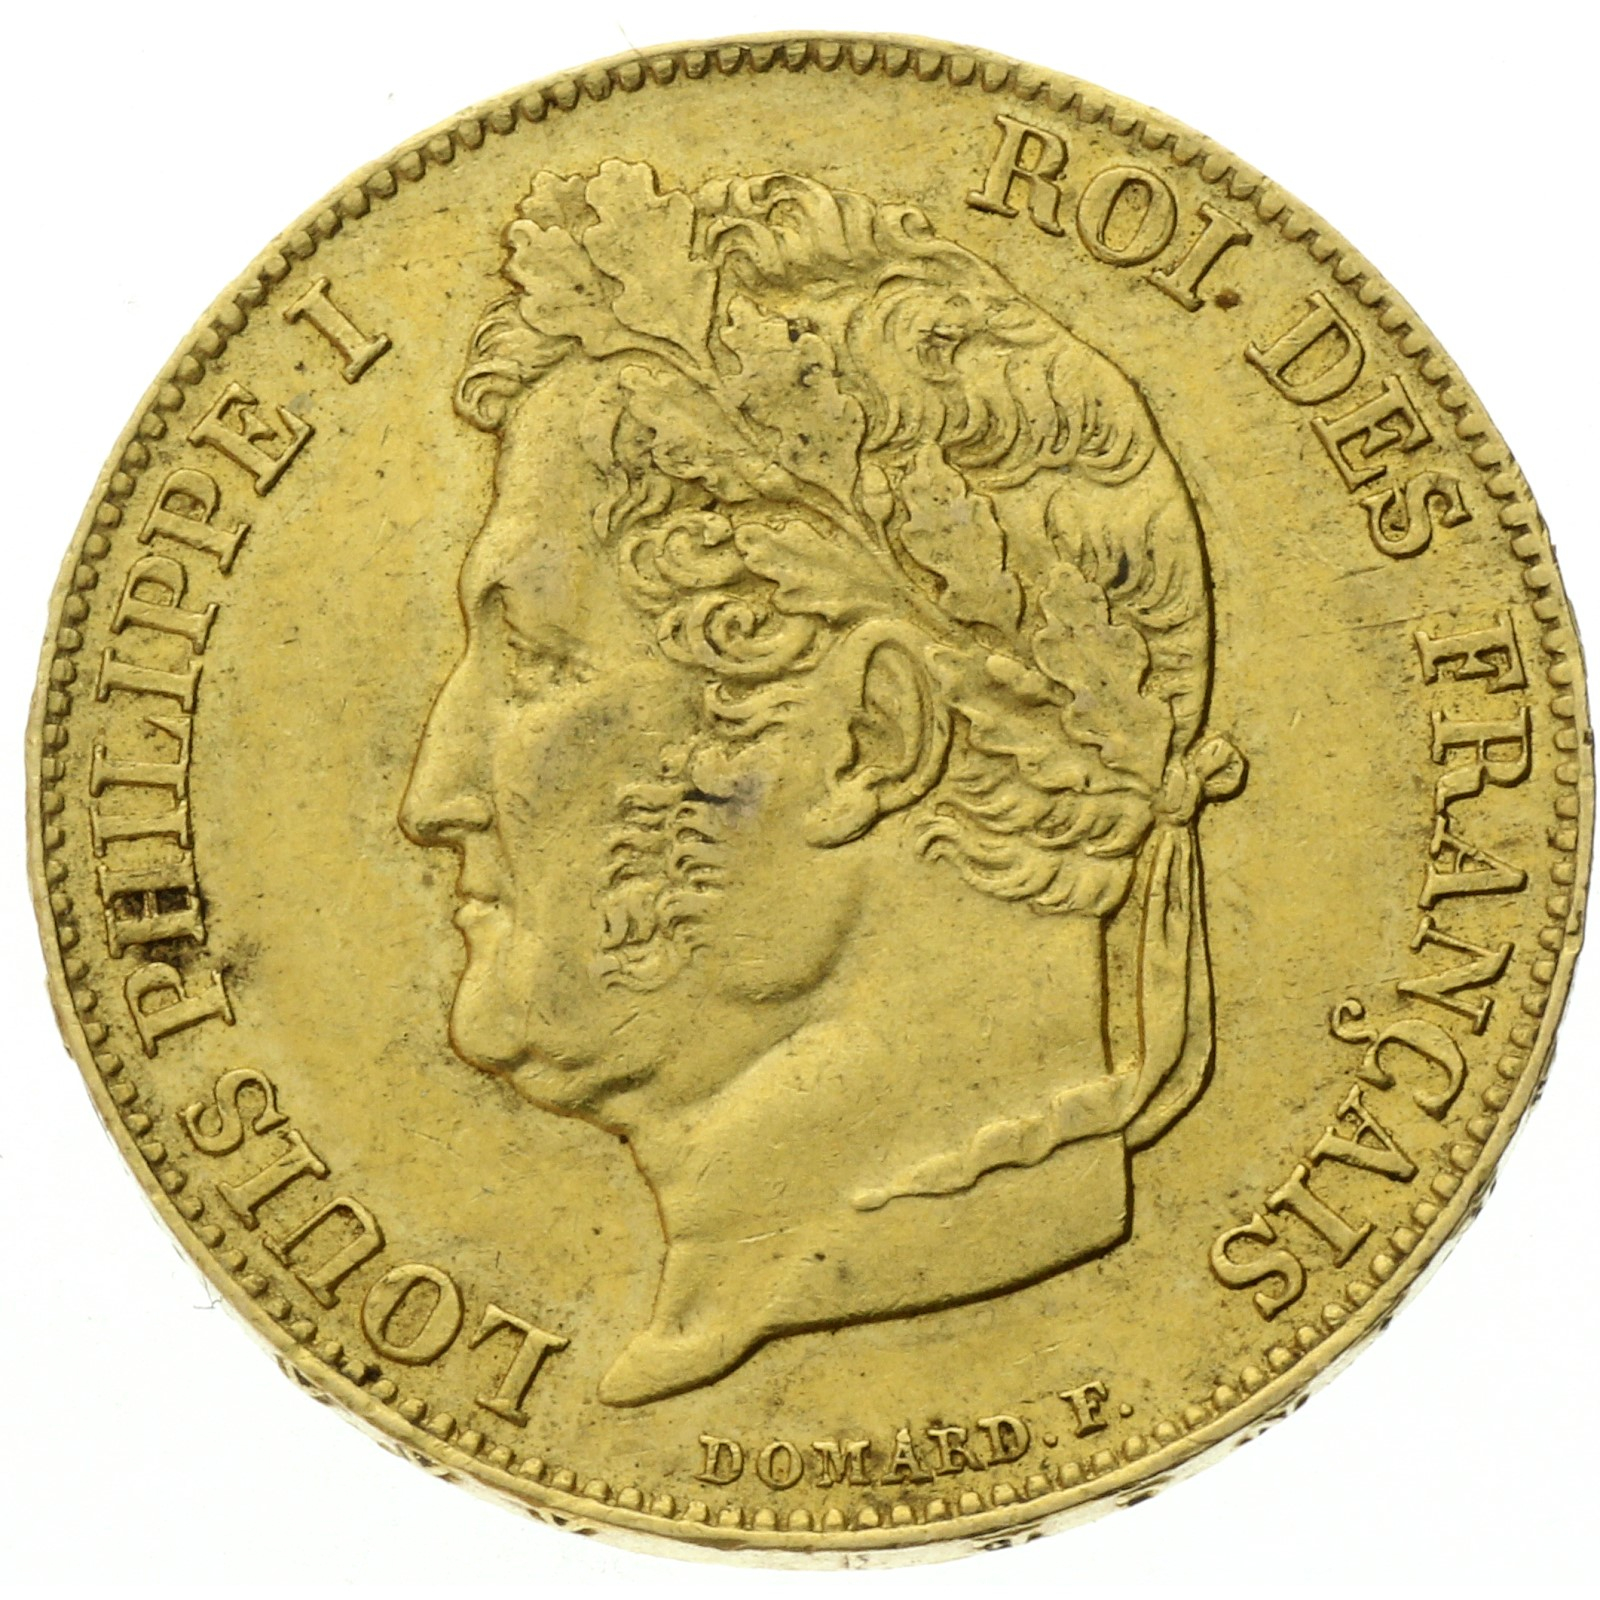 France - Louis-Philippe I - 20 francs - 1838 - W